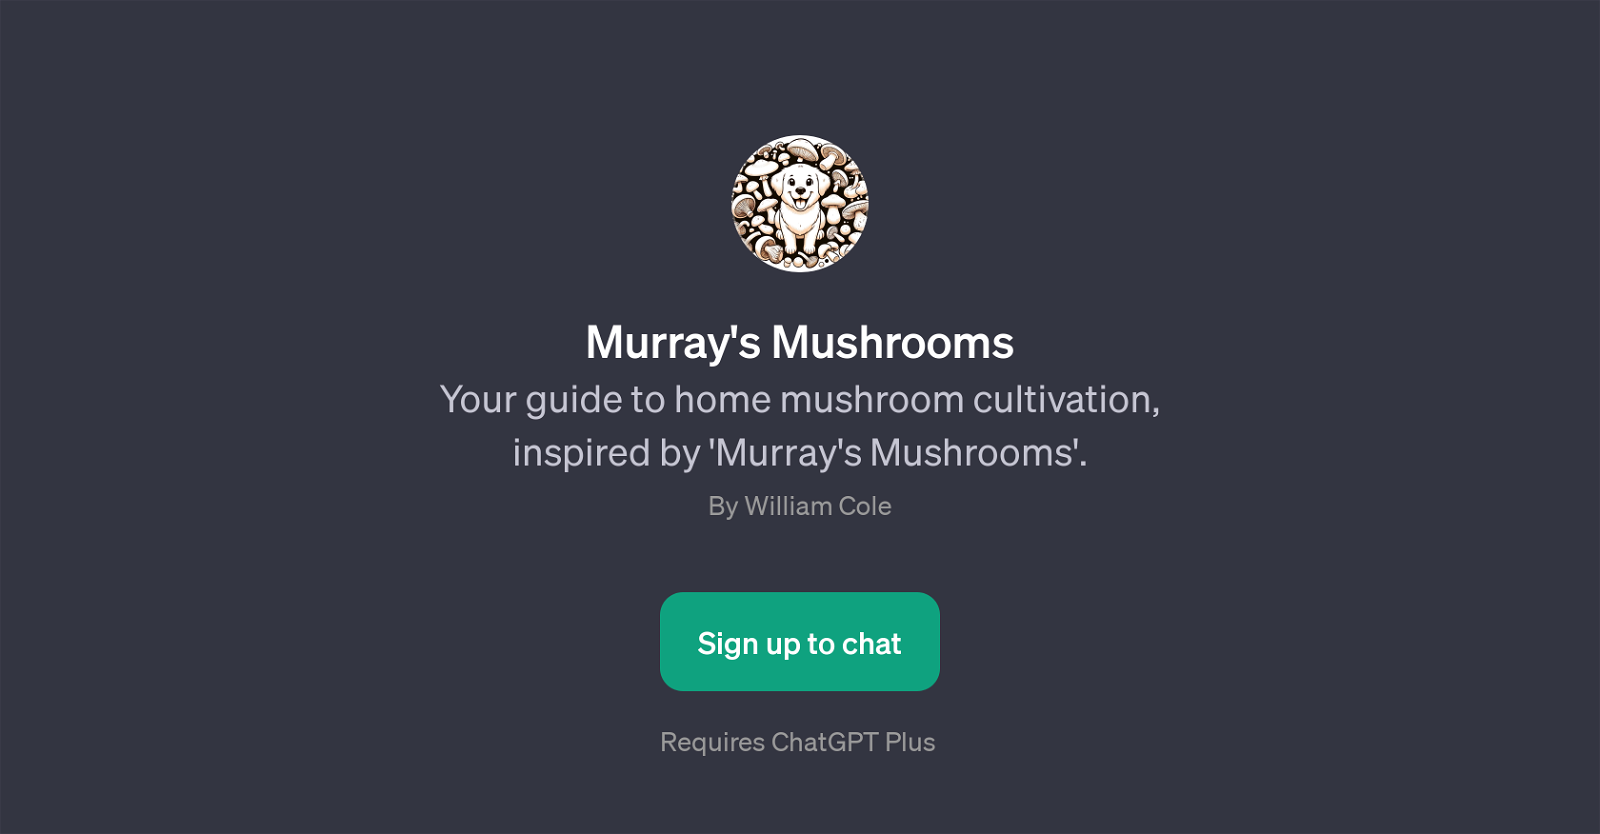 Murray's Mushrooms website